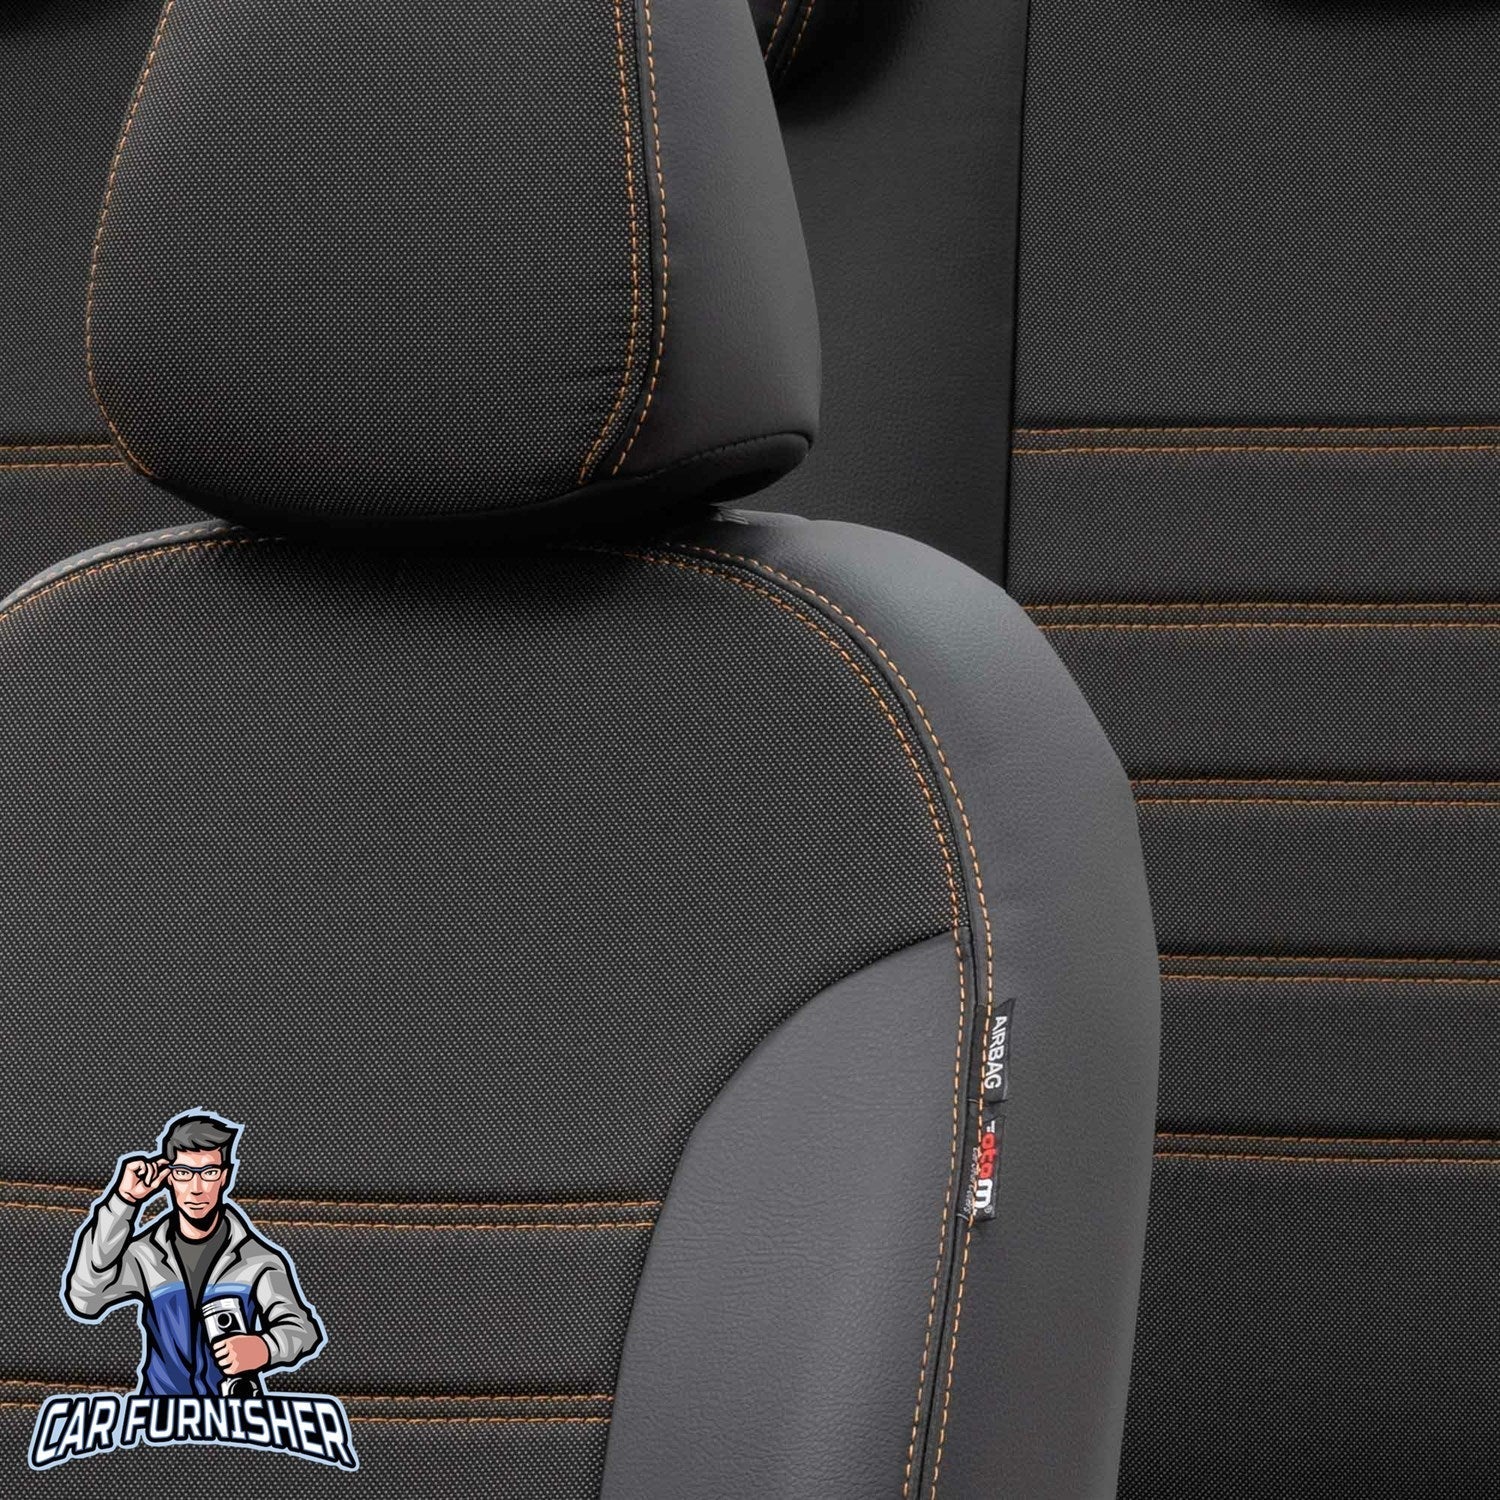 Citroen Jumpy Seat Covers Paris Leather & Jacquard Design Dark Beige Leather & Jacquard Fabric